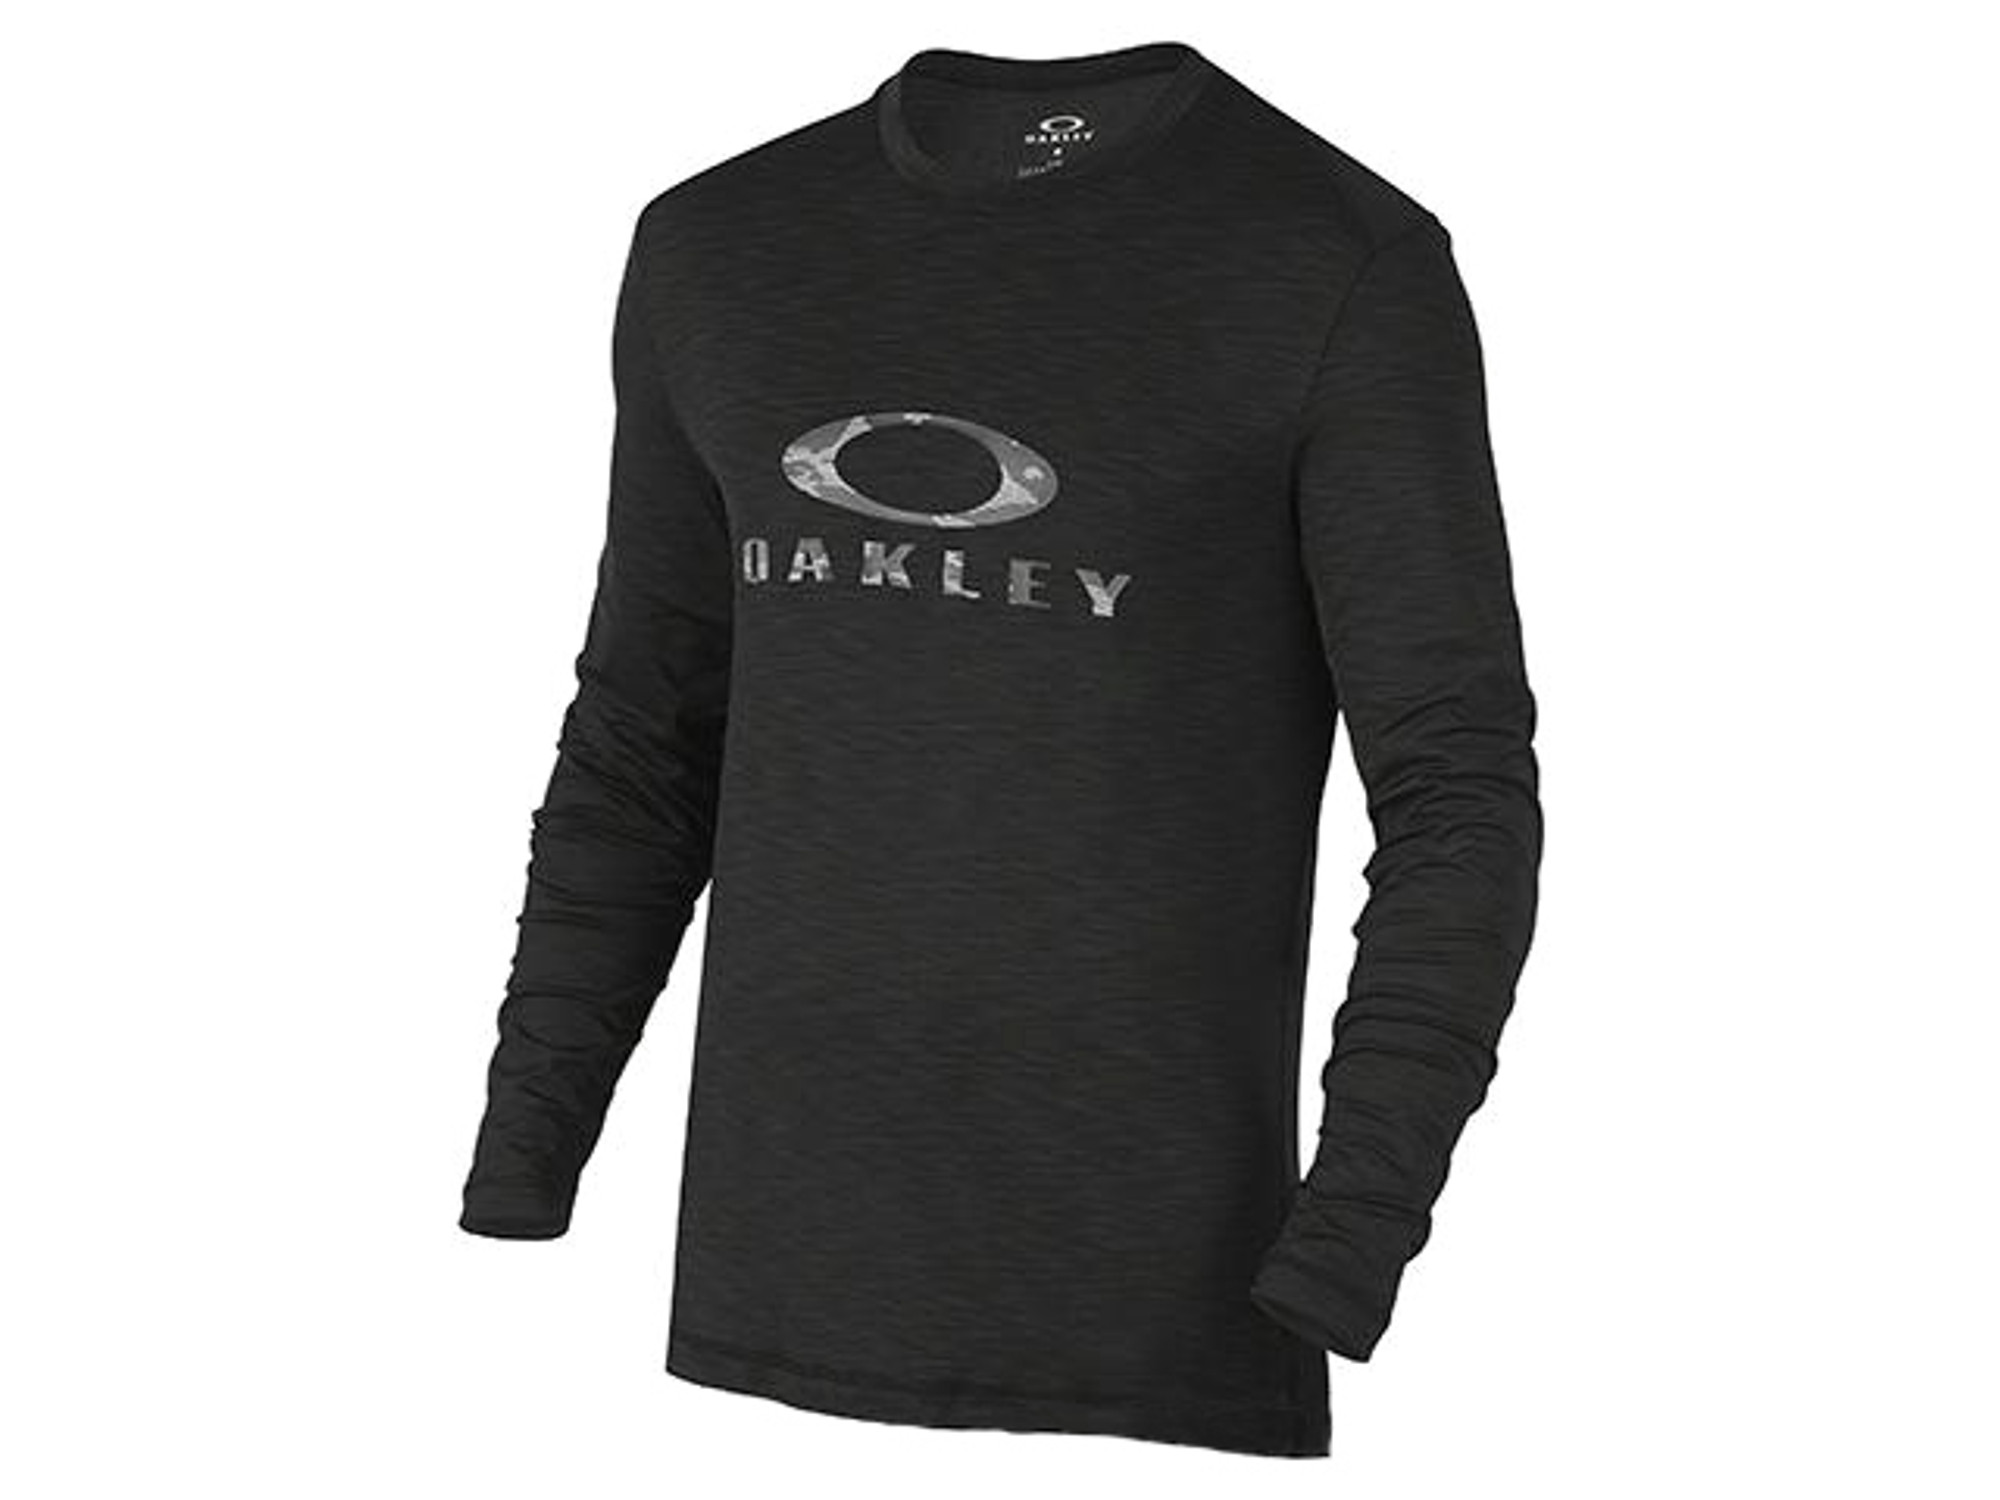 Oakley Surf Long Sleeve T-Shirt - Jet Black